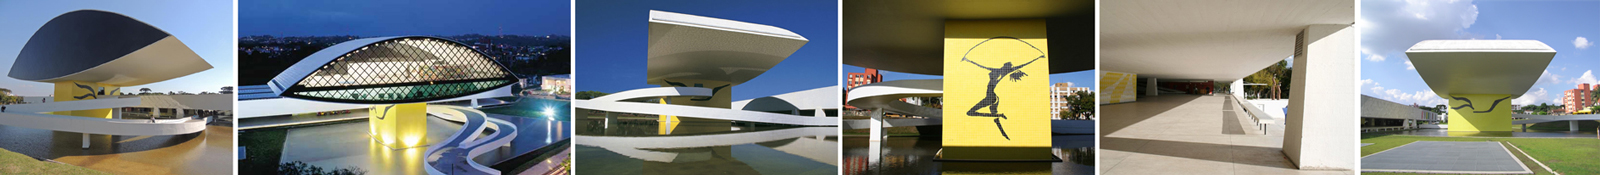 Curitiba Museu Niemeyer